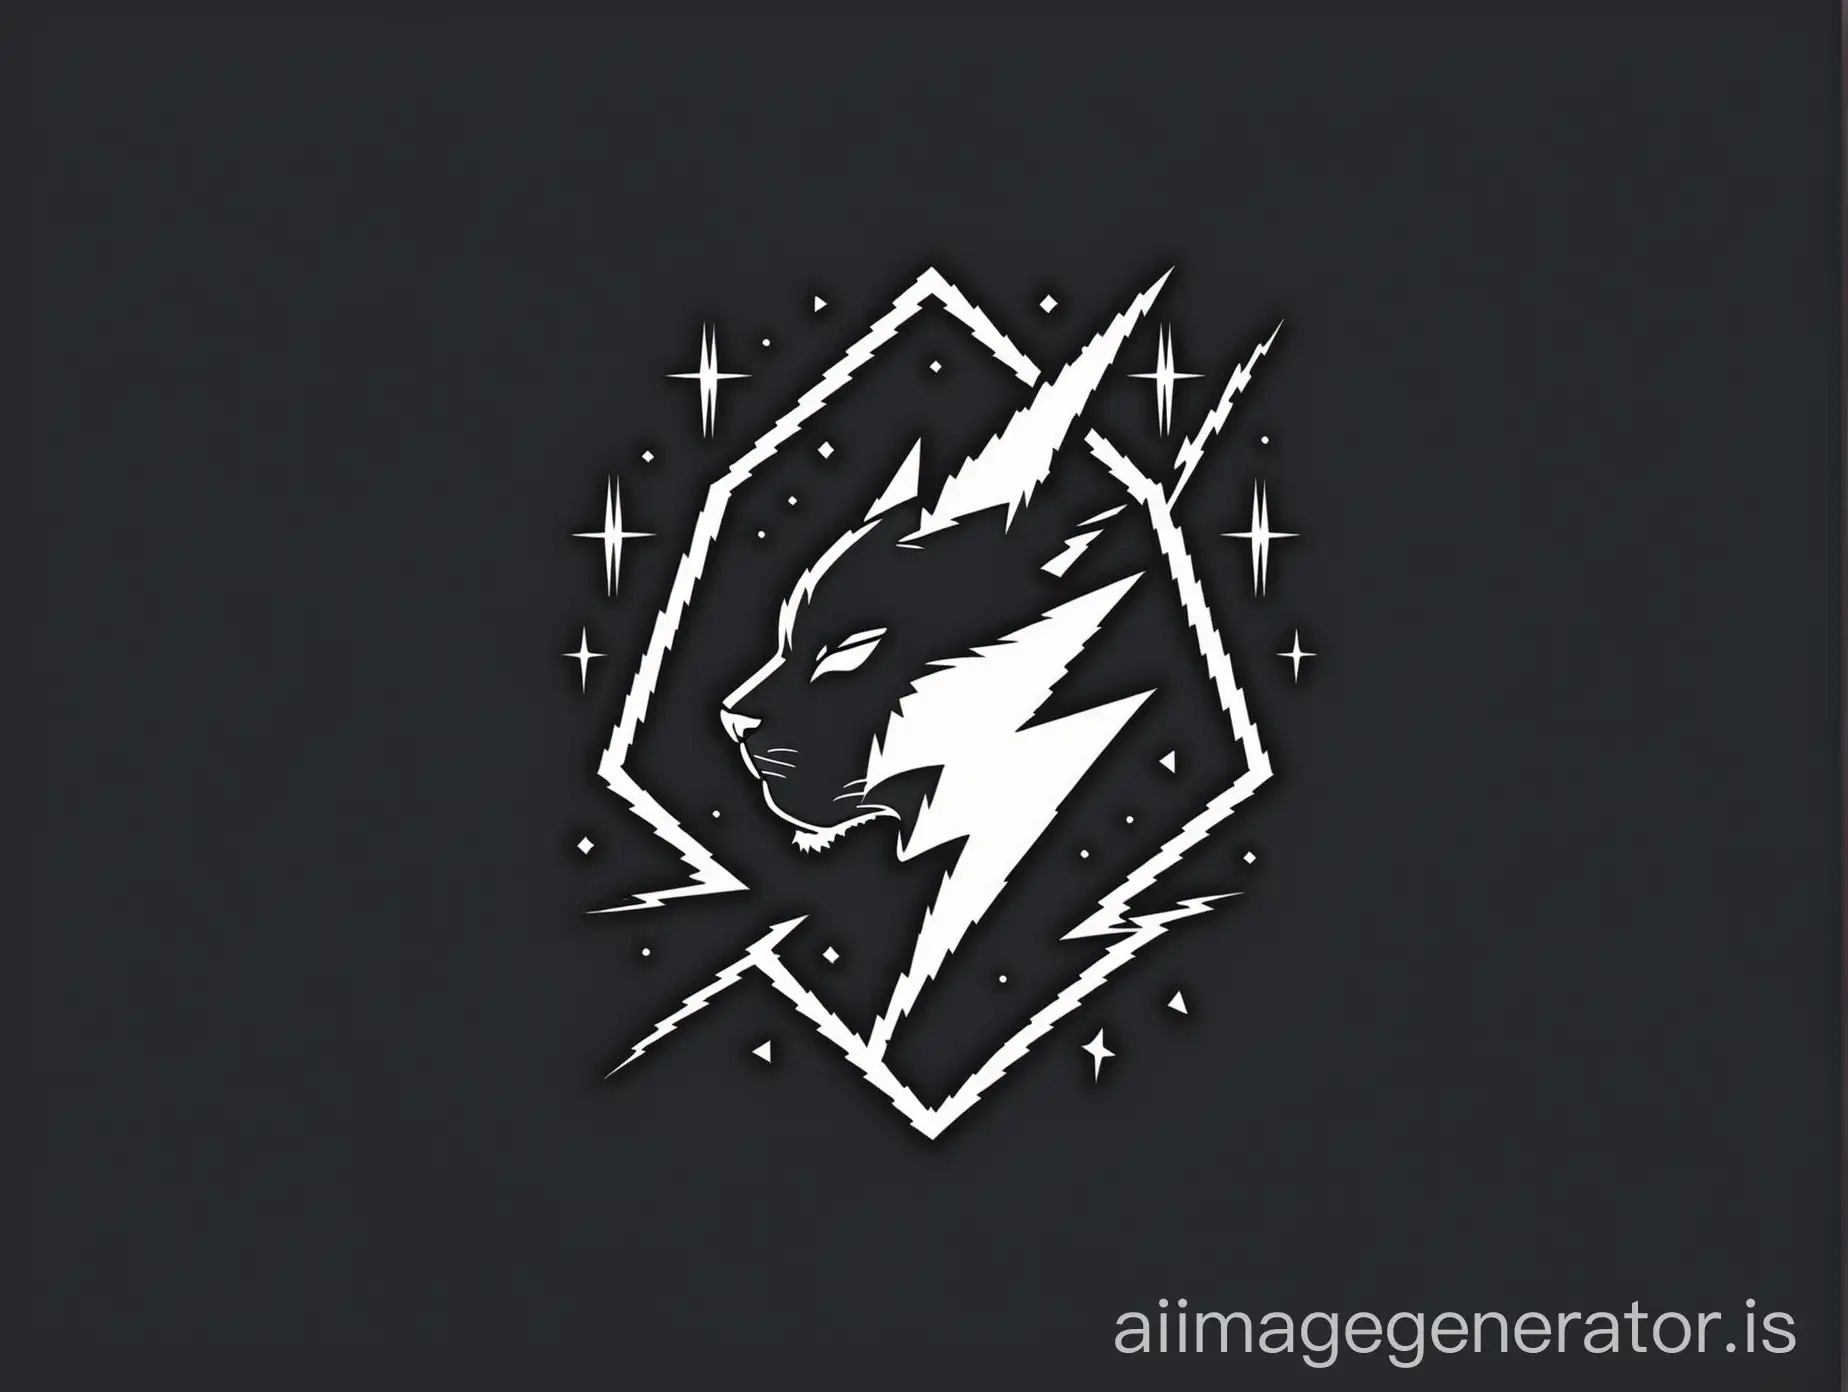 Minimalist-Lynx-and-Lightning-Bolt-Logo-Simple-Polygonal-Design-in-Black-and-White